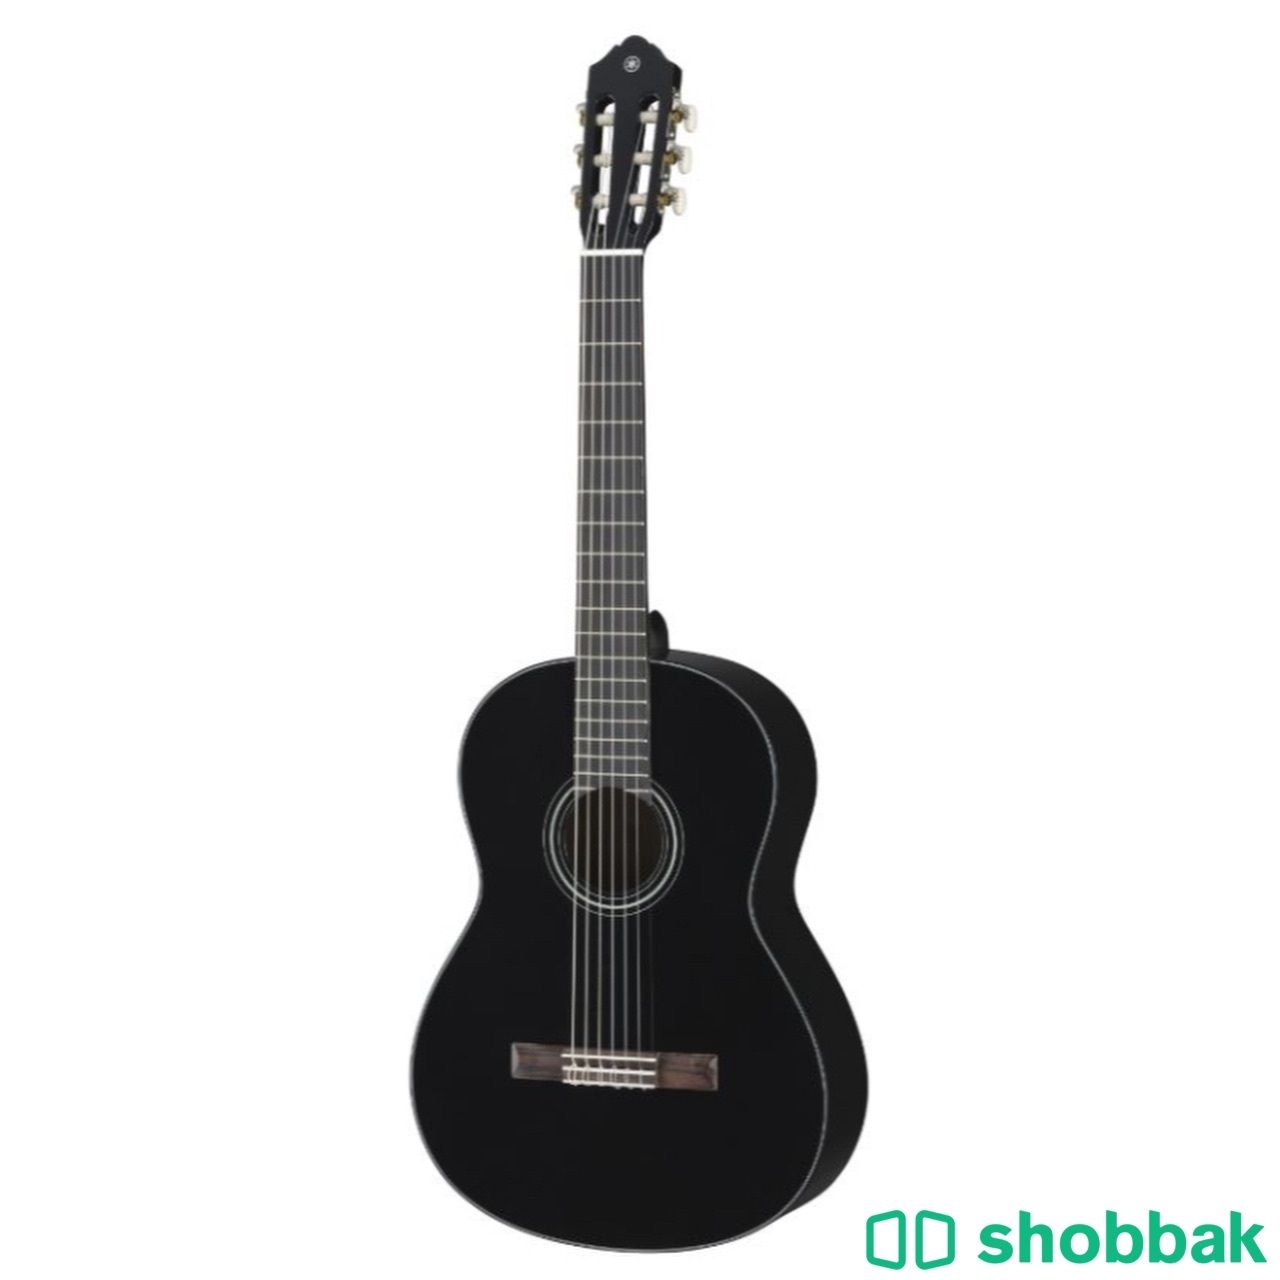 Yamaha C-40 Classical Guitar Black Shobbak Saudi Arabia